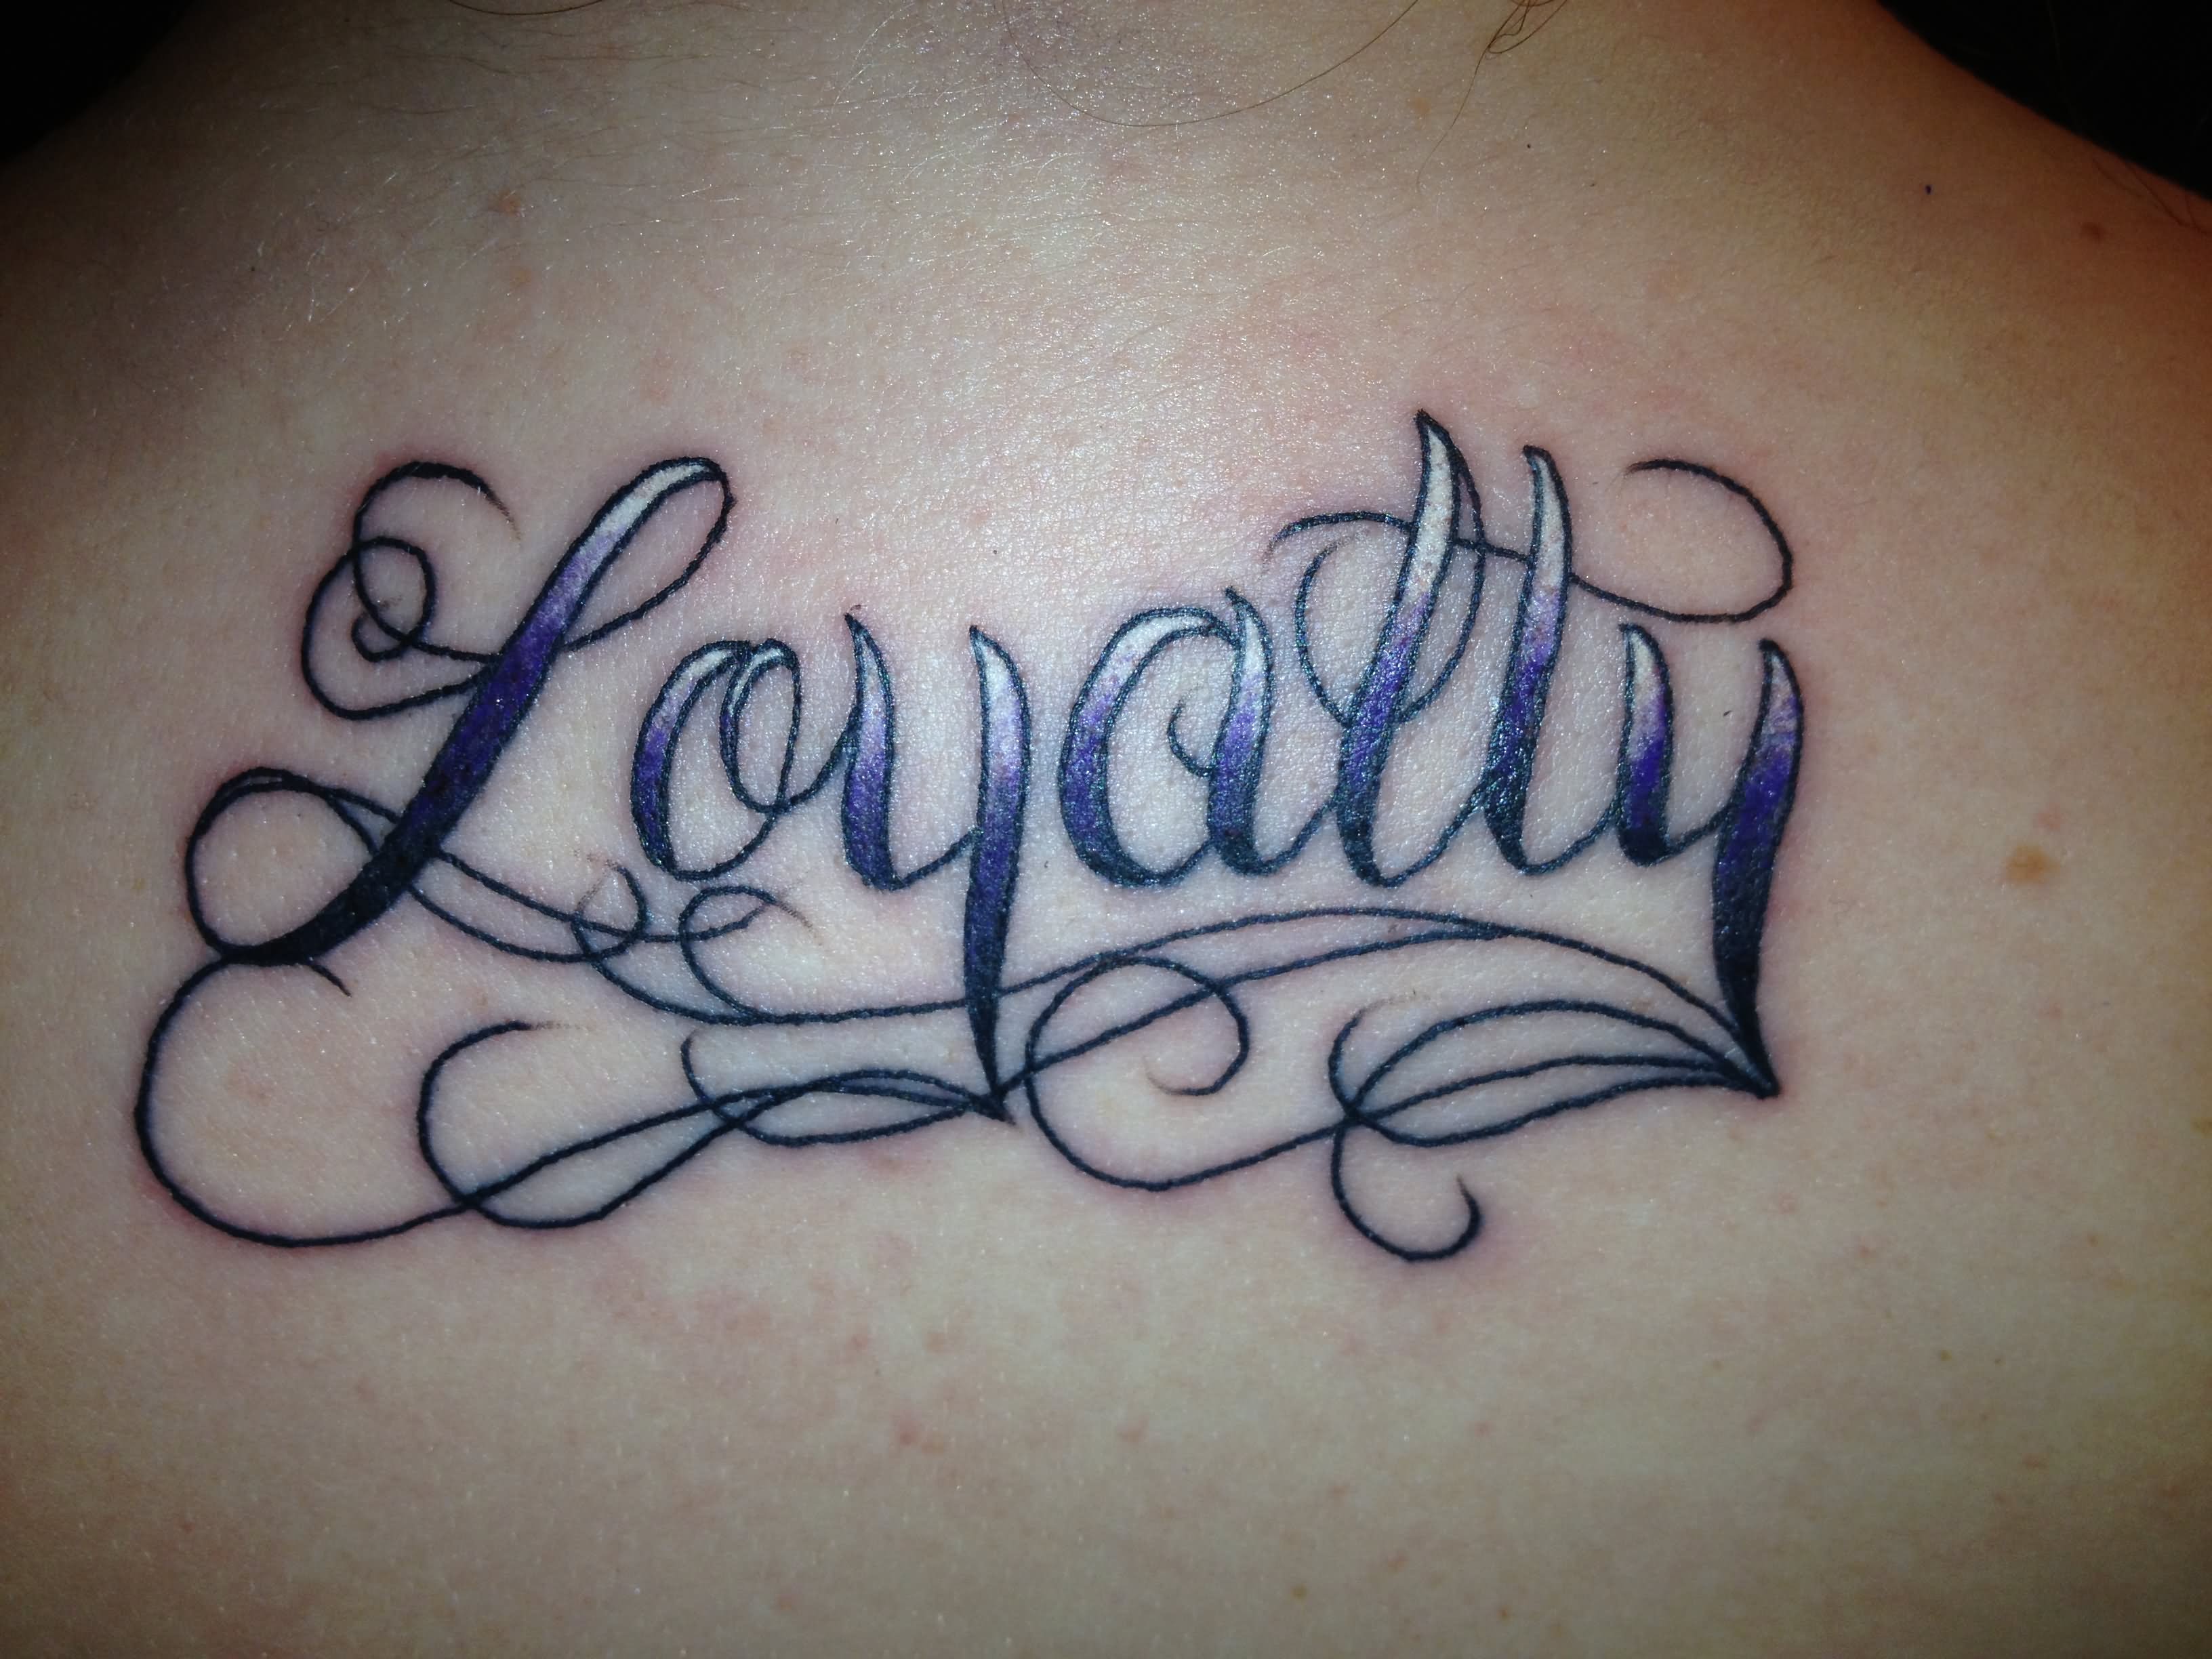 3+ Loyalty Tattoo Designs And Ideas
 Loyalty Tattoo On Wrist